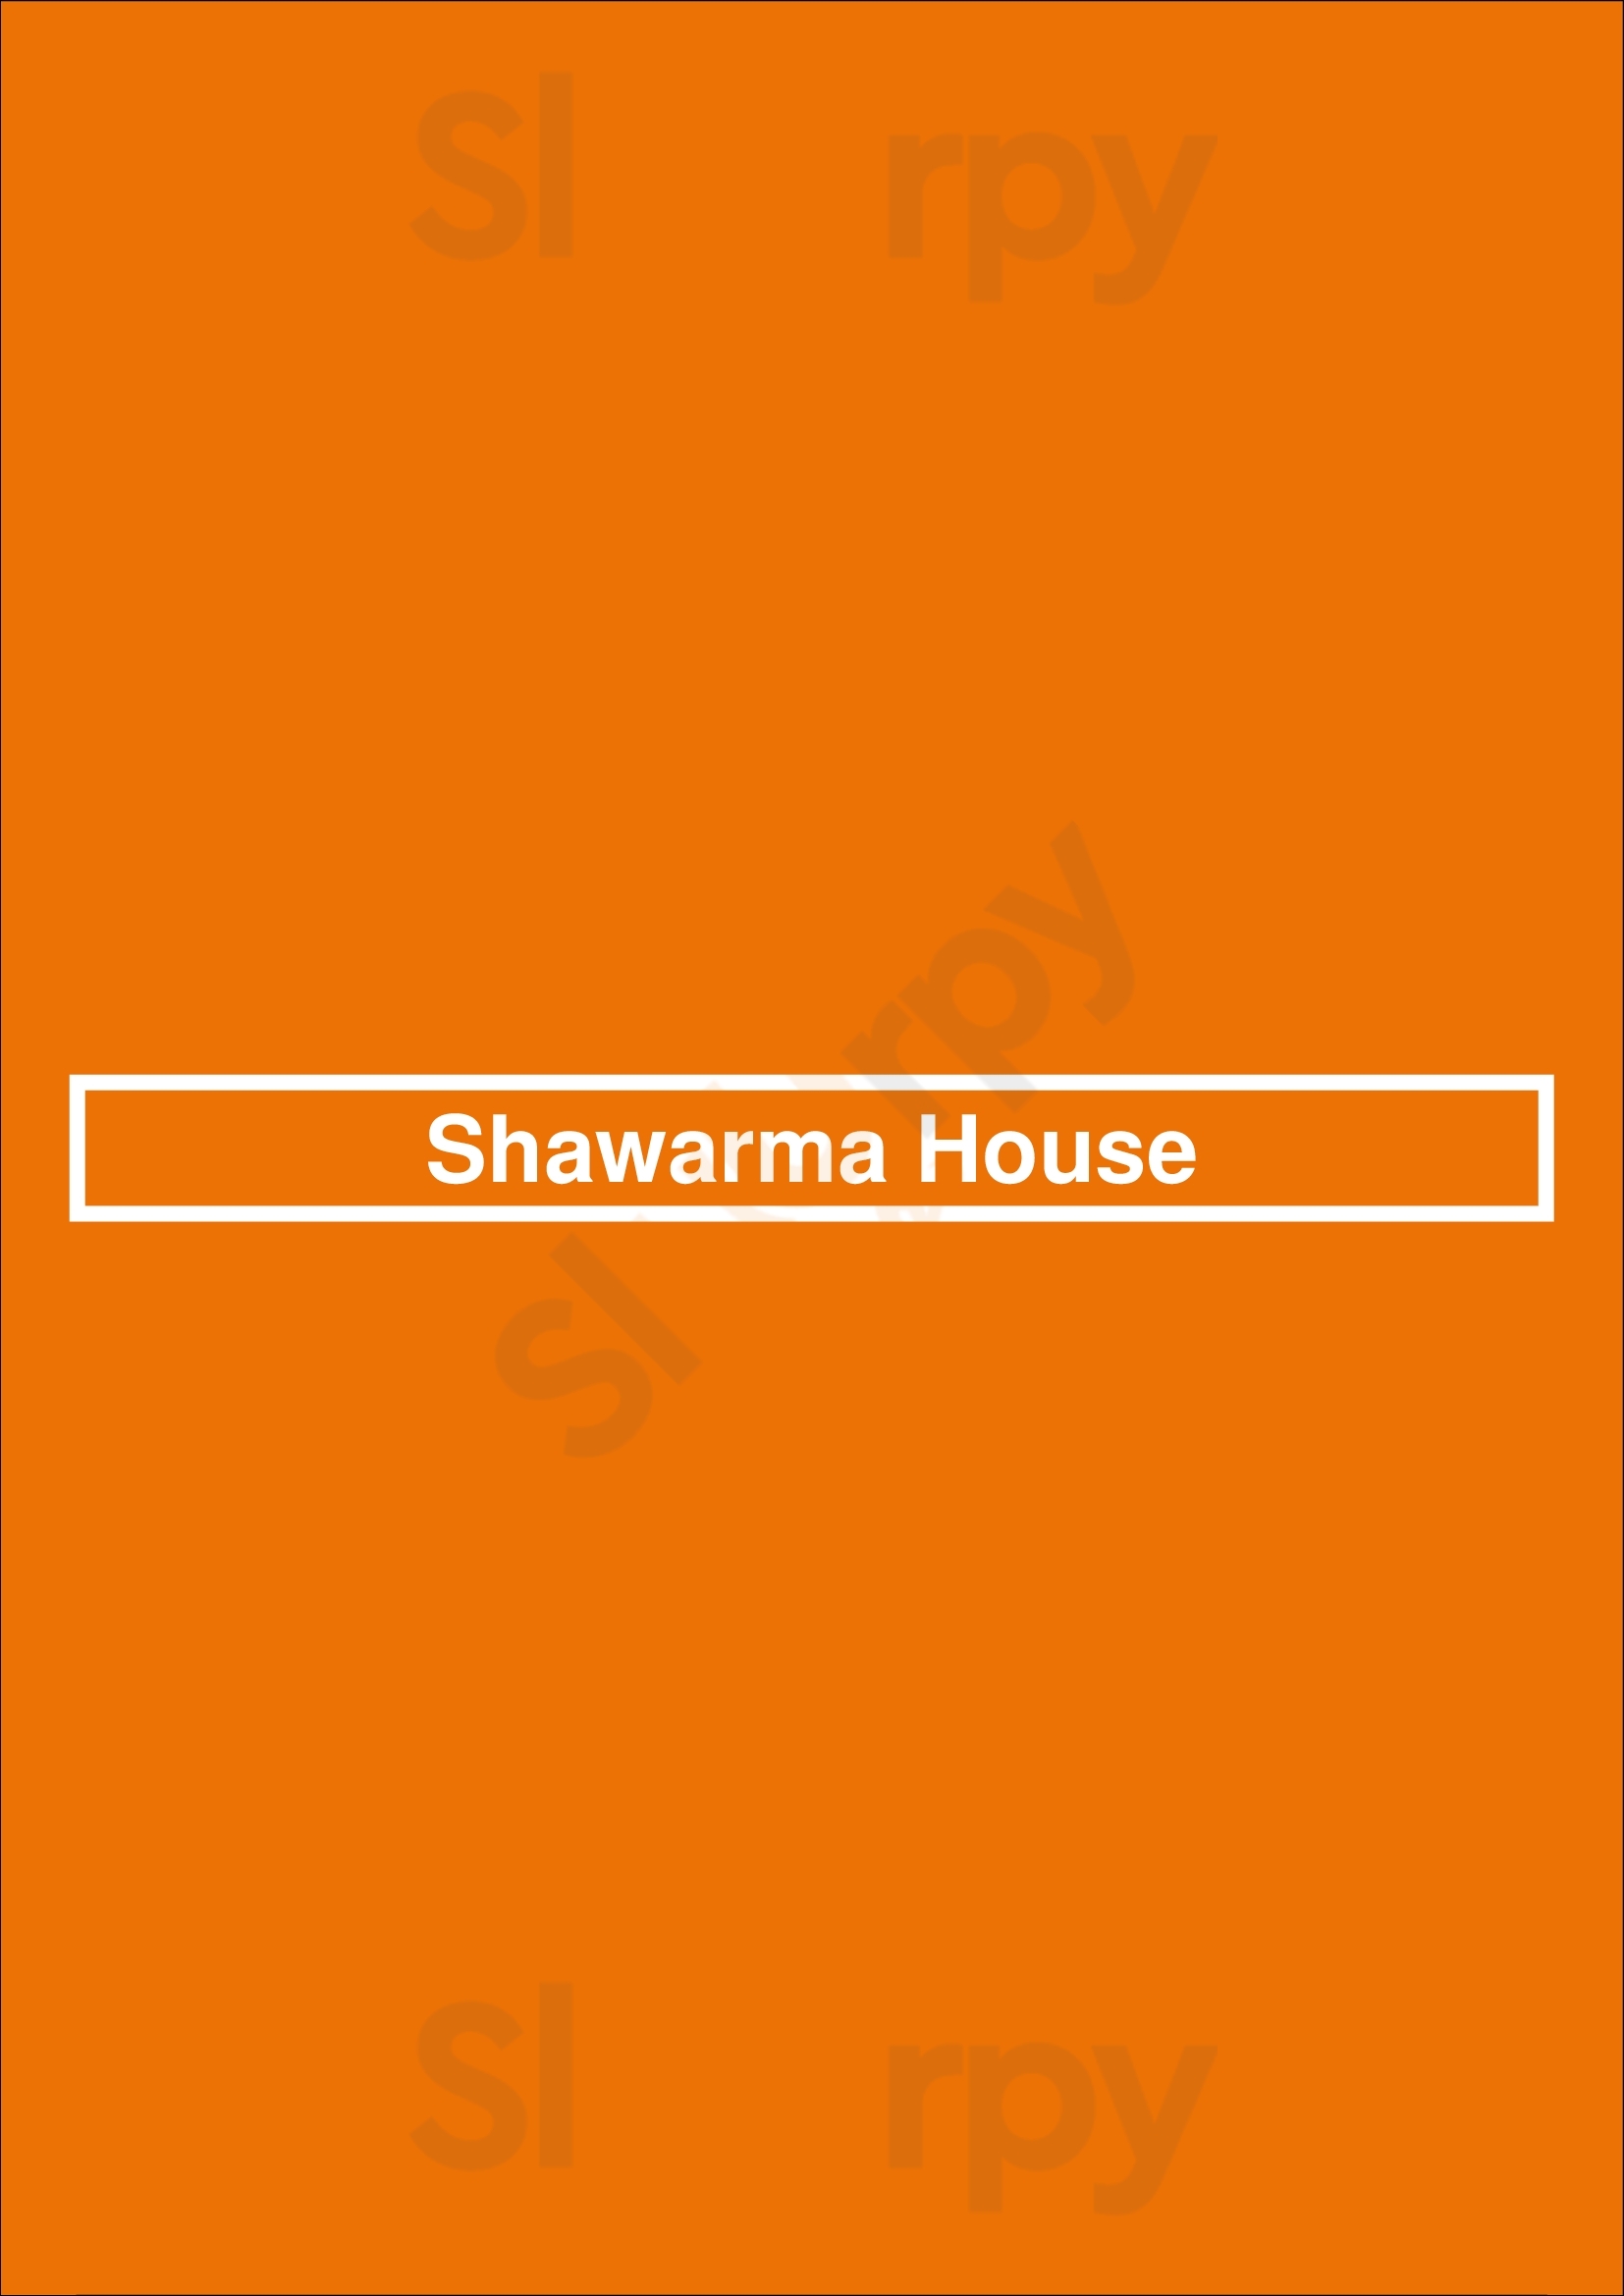 Shawarma House New York City Menu - 1